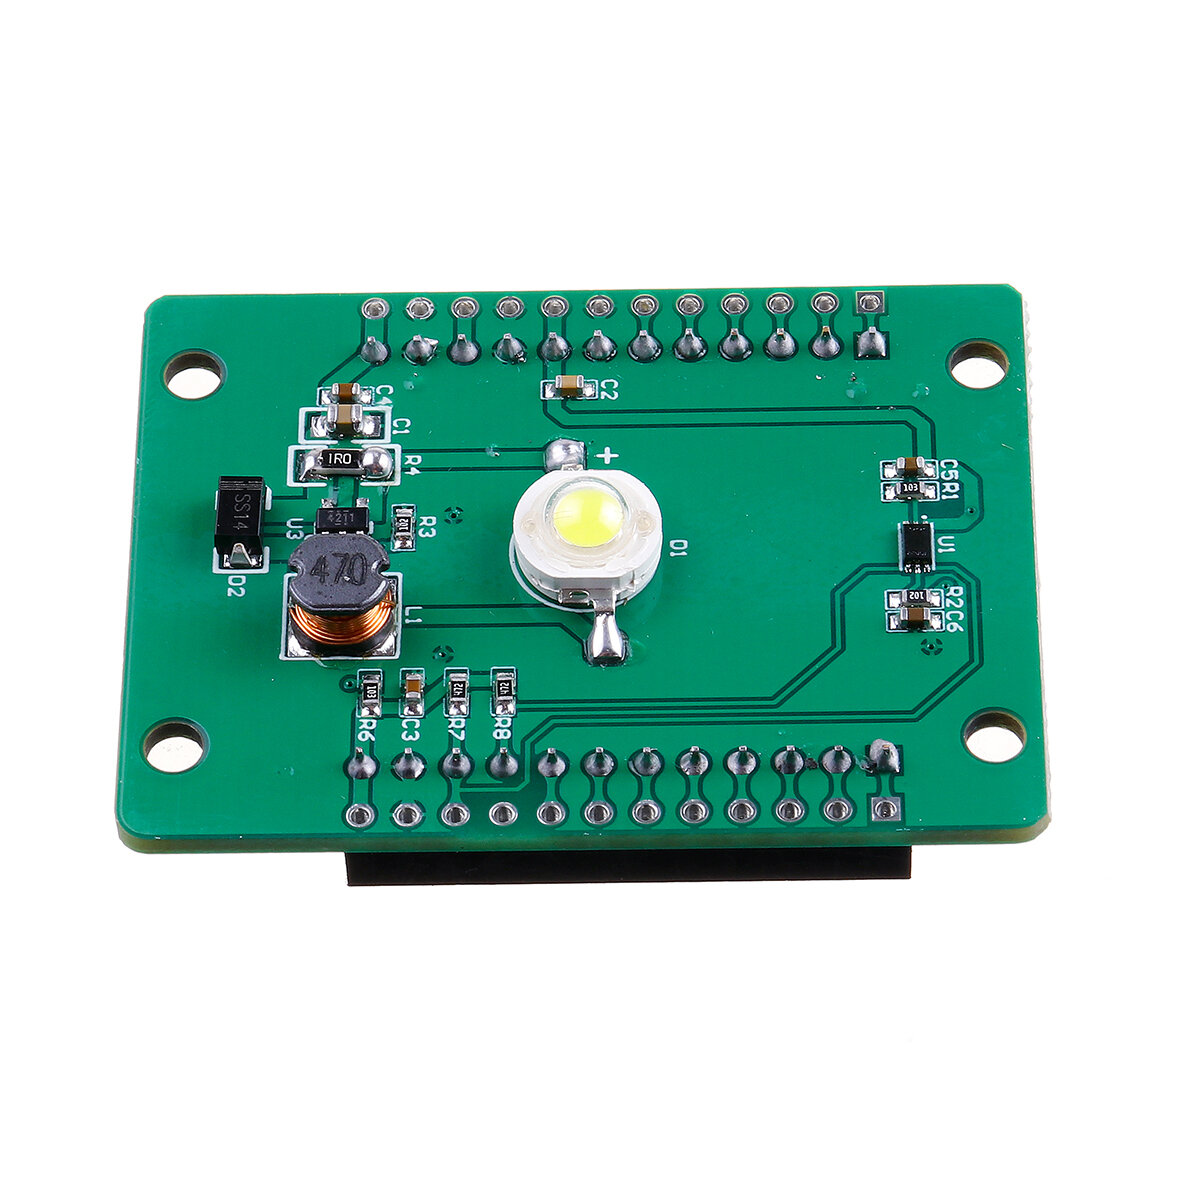 Hongmeng Hi3861 Development Board Expansion Module Light Intensity Sensor Module with 1W LED Light